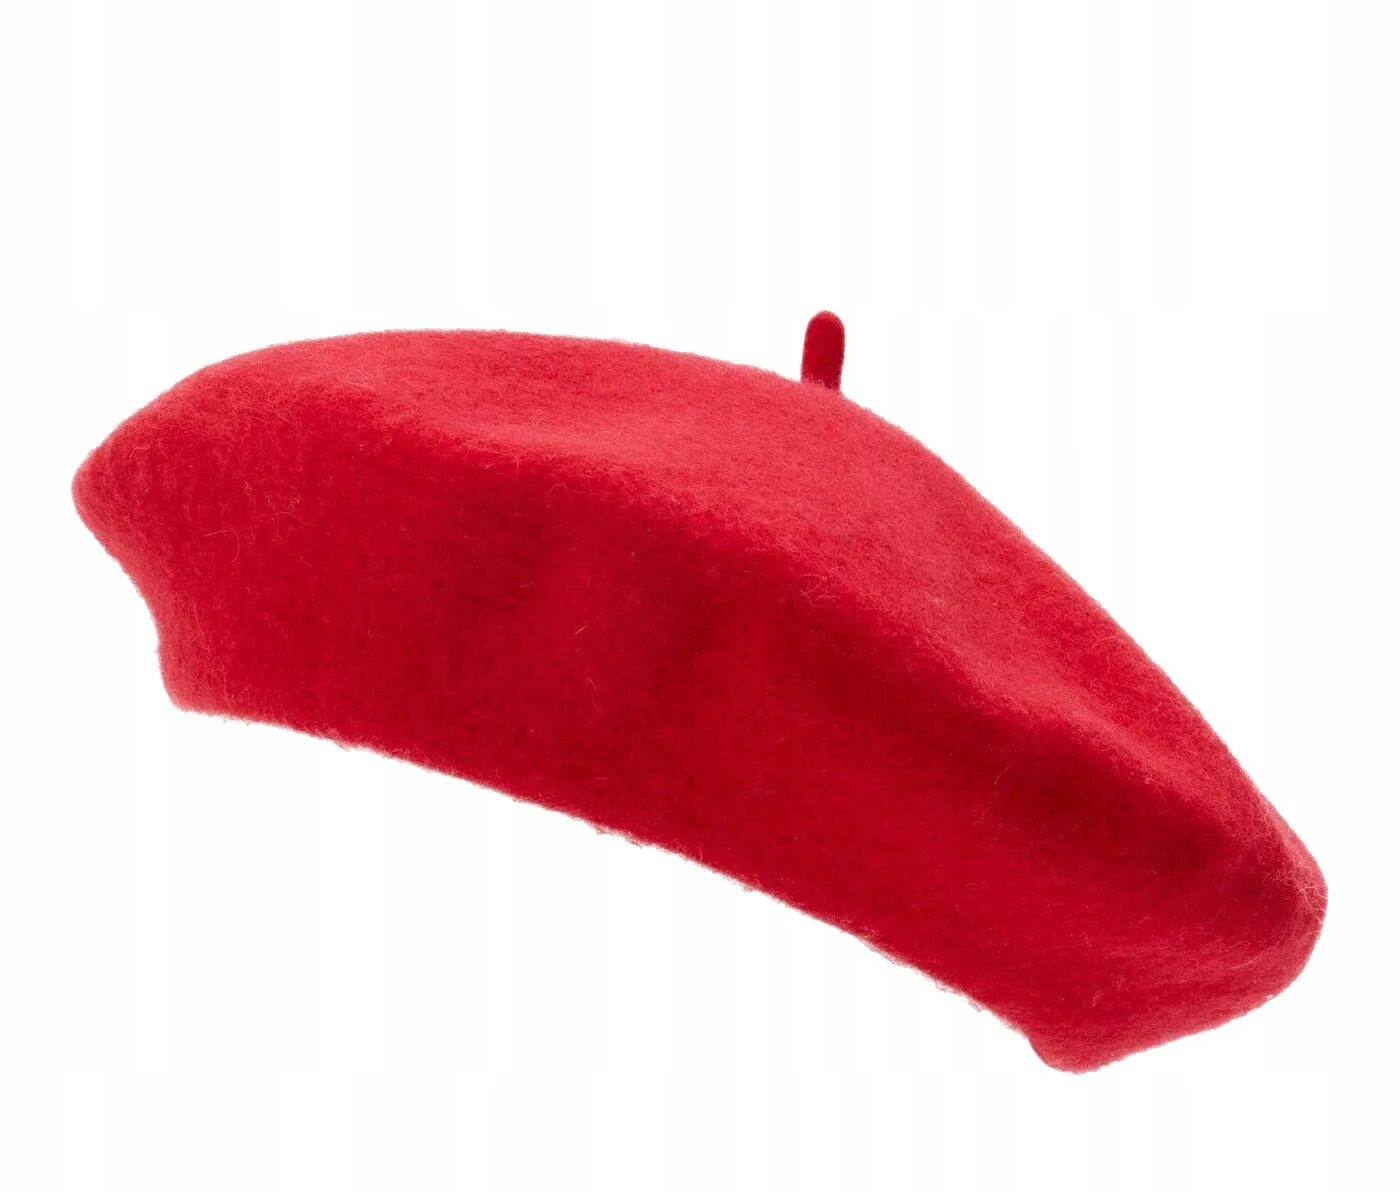 Беретка французская красная. Красный французский берет. Французский головной убор красный. Красная шляпа французская.